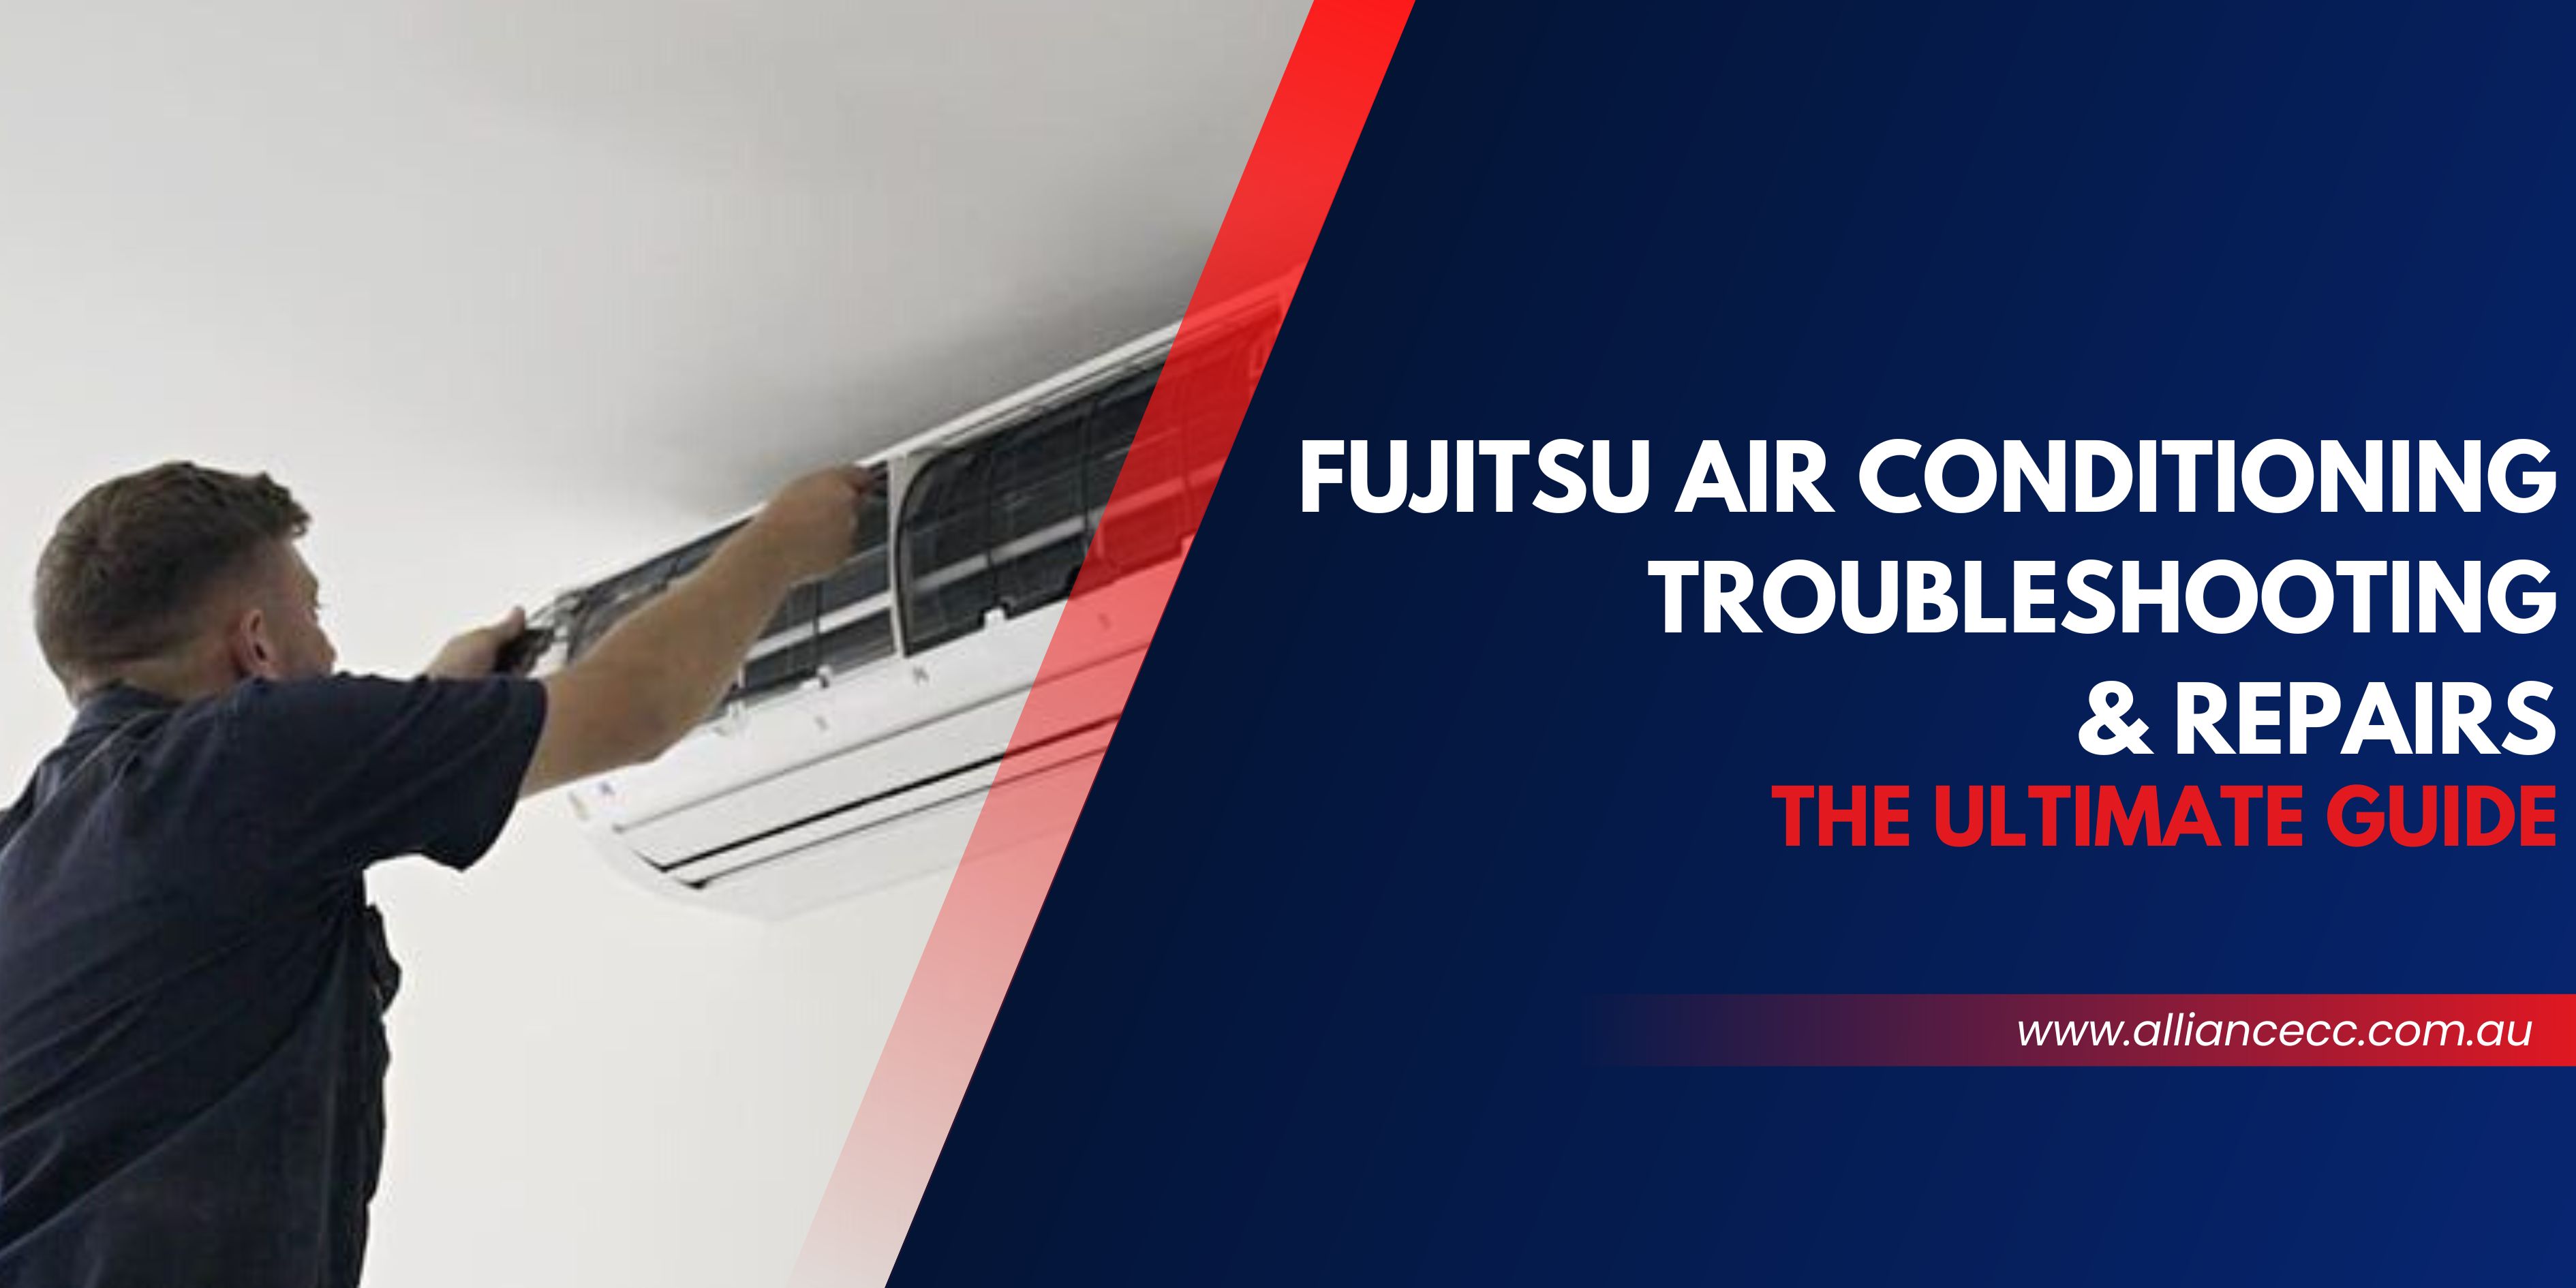 https://www.alliancecc.com.au/wp-content/uploads/2016/10/Fujitsu-Air-Conditioning-Troubleshooting-scaled.jpg